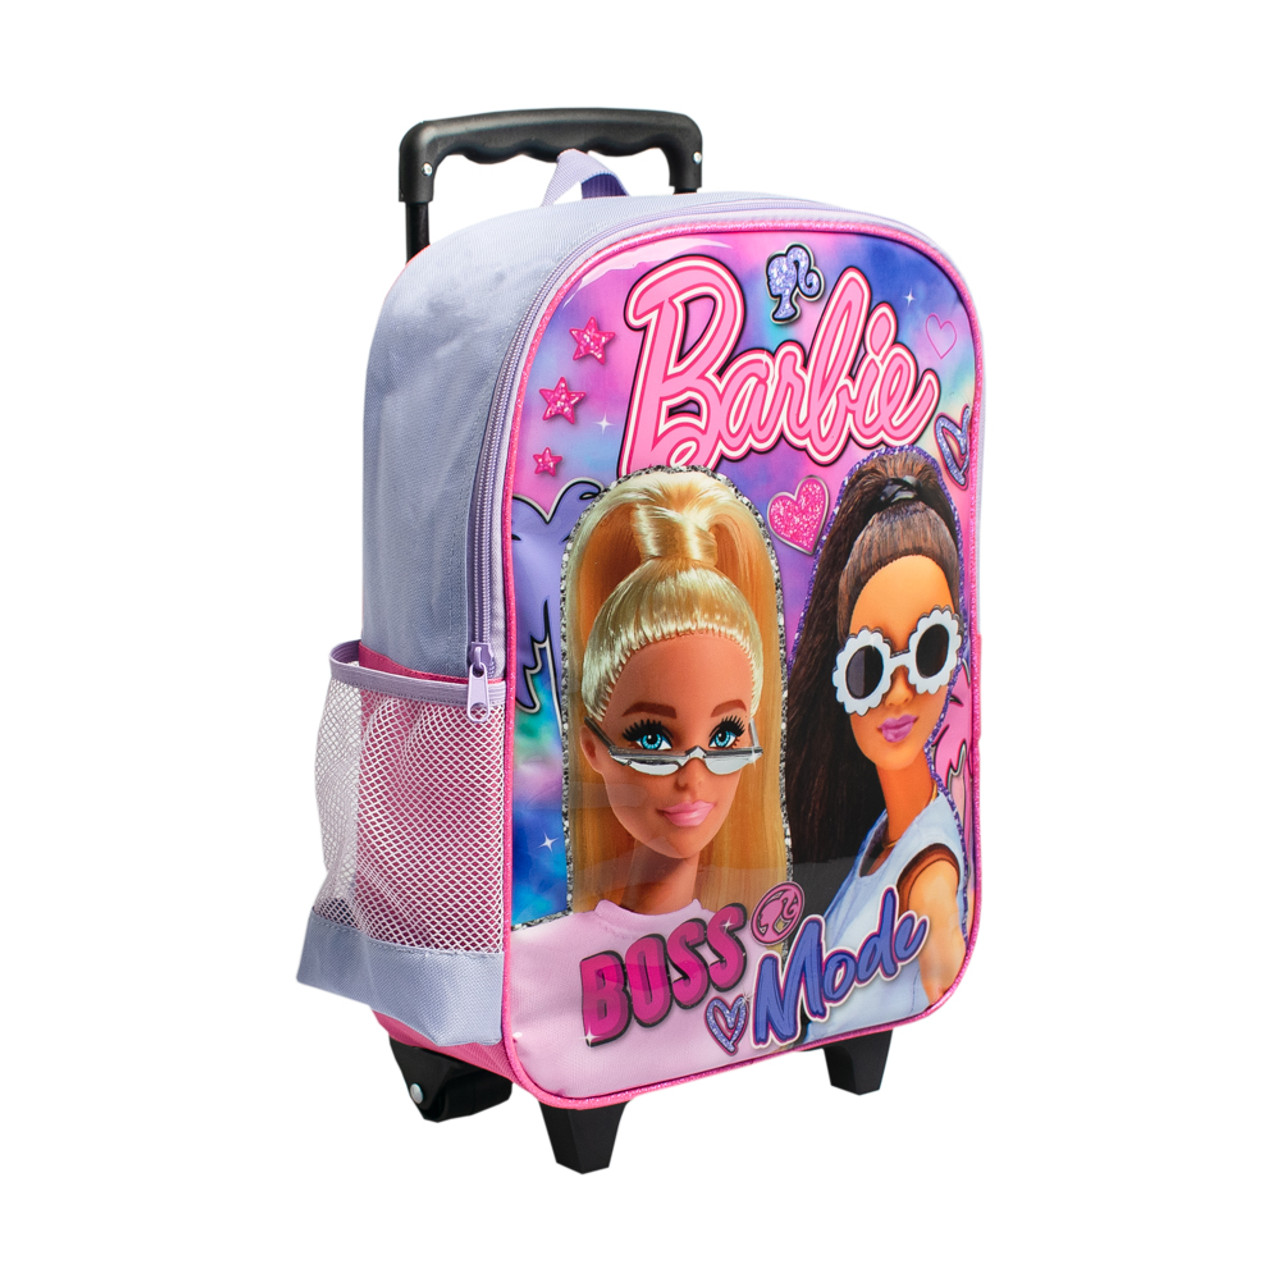 Barbie Rolling Trolley Bag Backpack Wheeled Carry On Luggage Bag or School  Bag | eBay